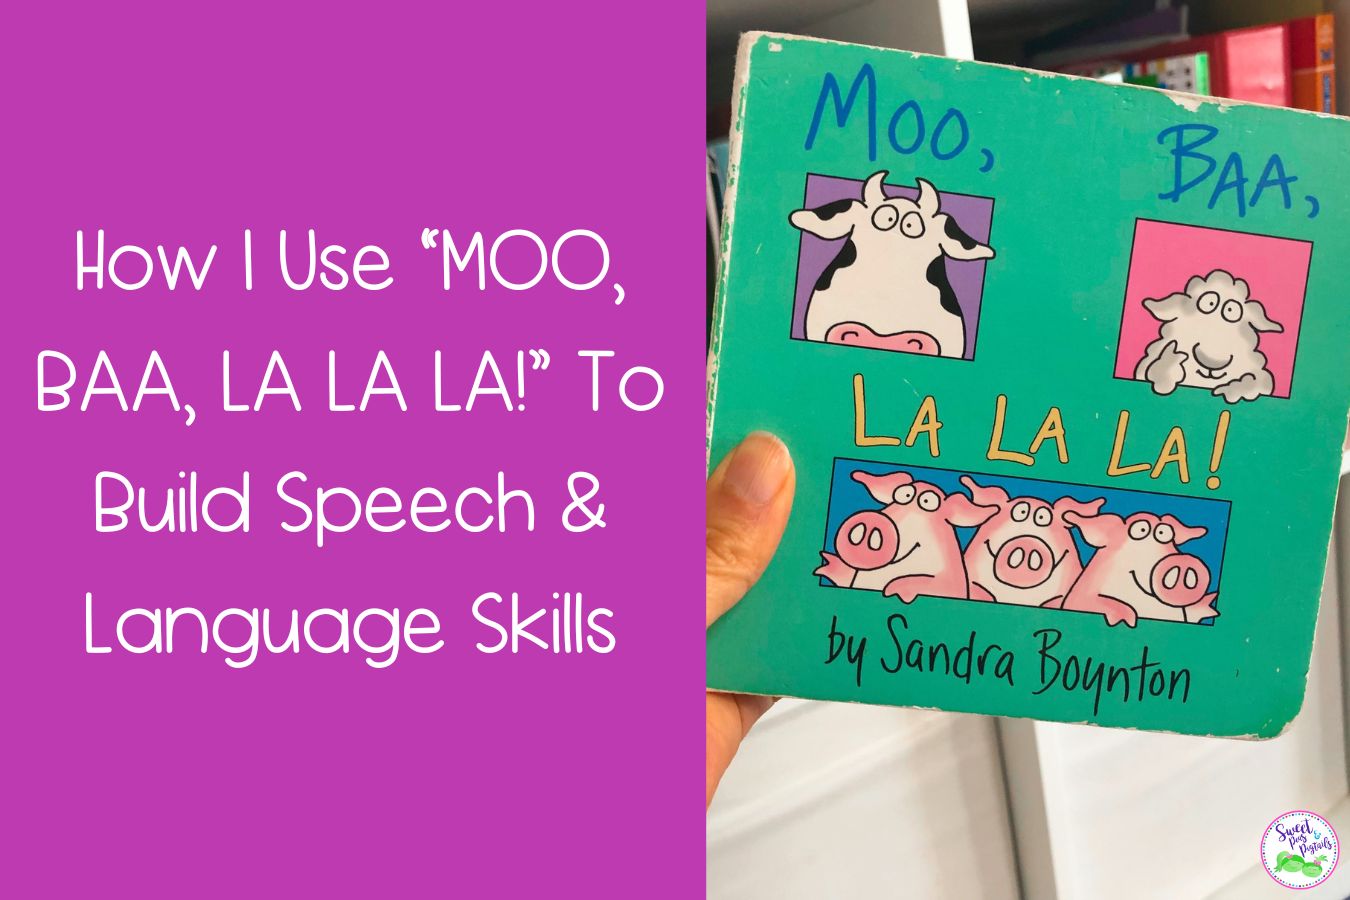 How I Use “MOO, BAA, LA LA LA!” To Build Speech & Language Skills Featured